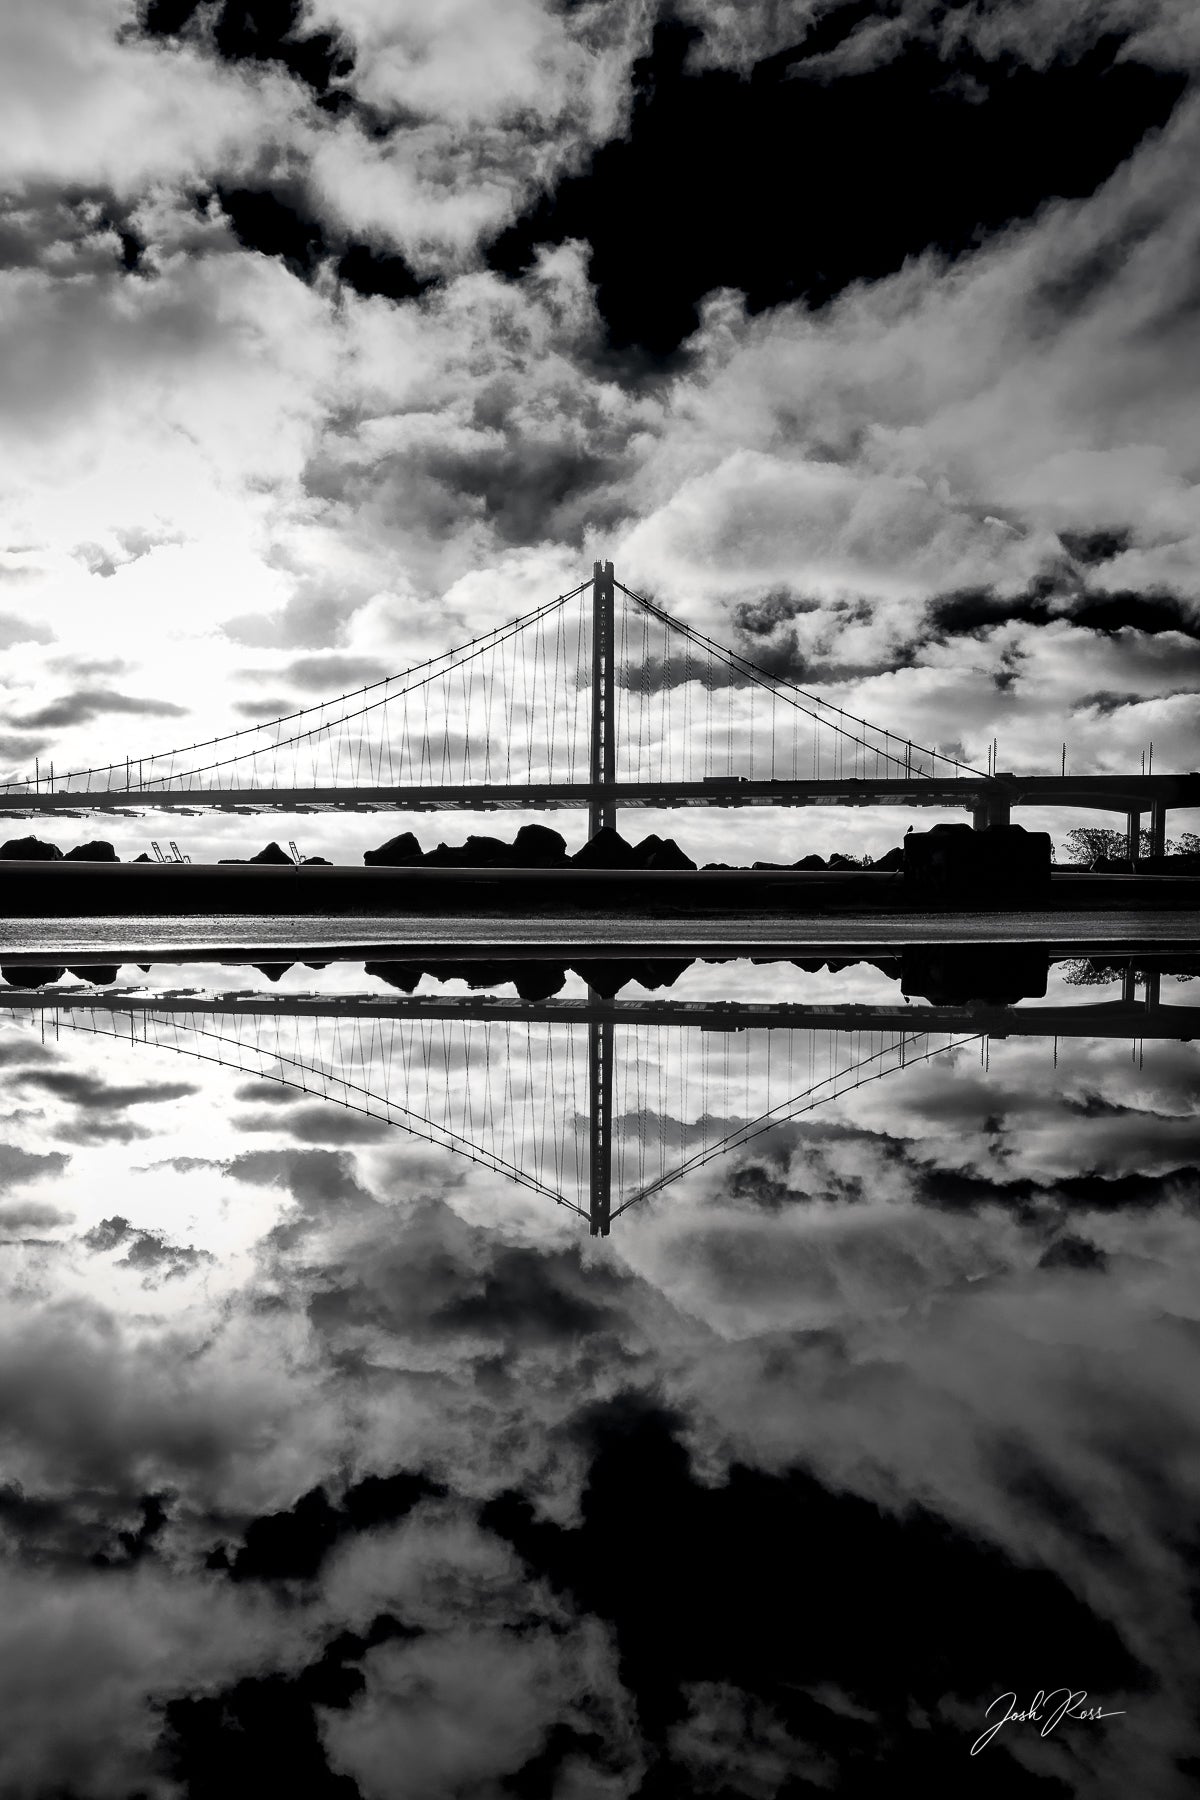 Reflections of the Bay Bridge